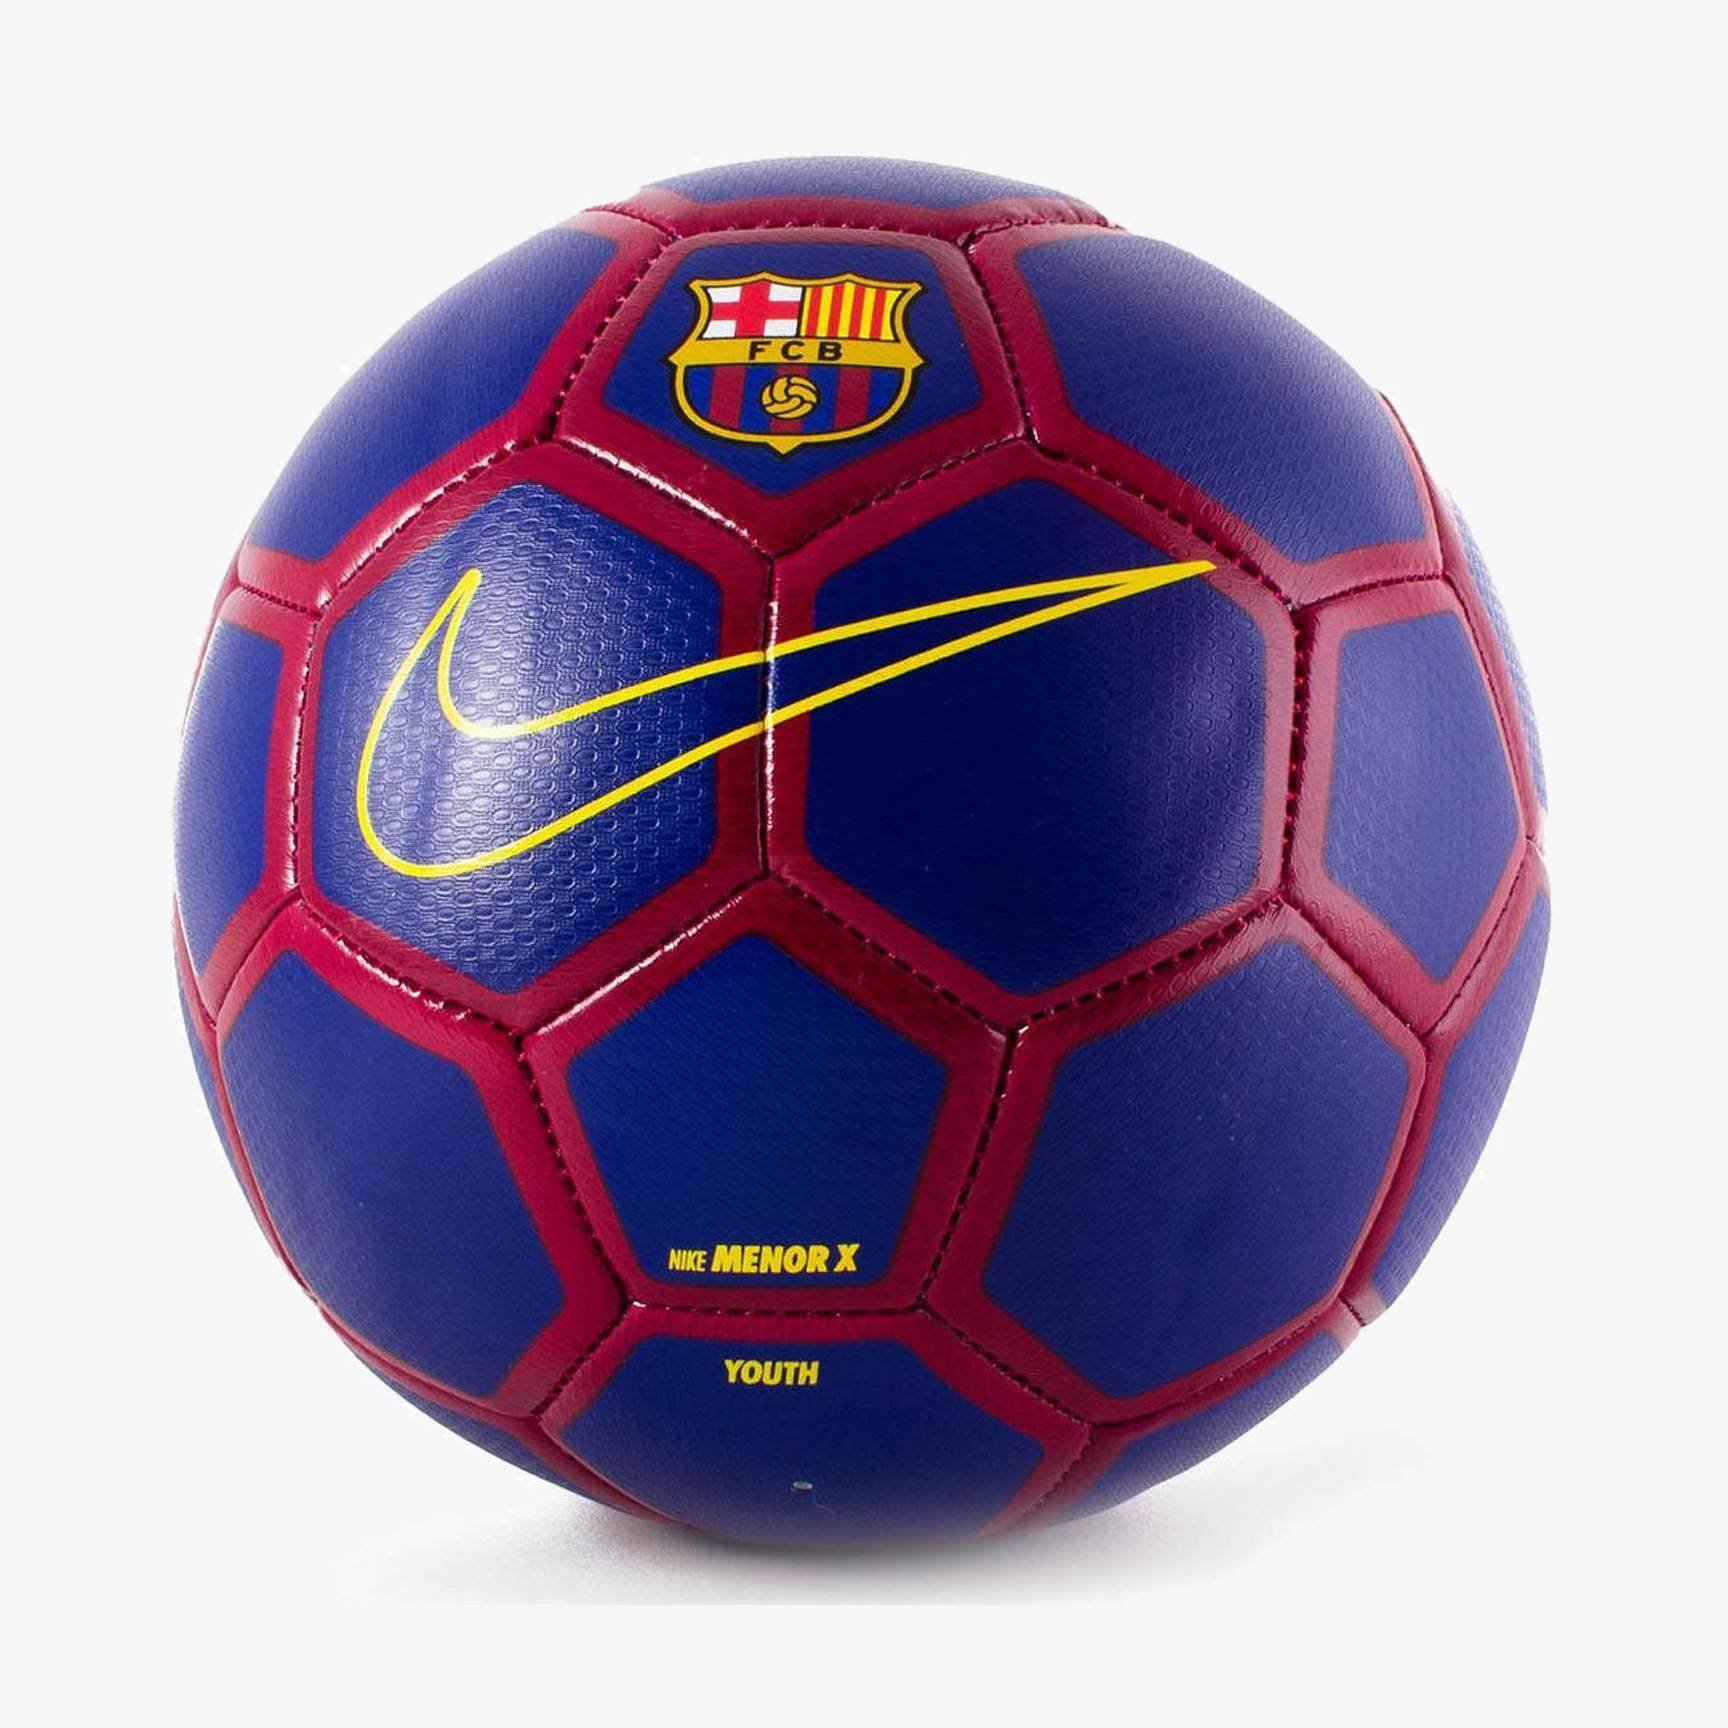 Покажи футбол мяч. Мяч футзальный Nike FCB menor x. Мяч футбольный Nike NK menor x. Софтбольный мяч. Мямящ.